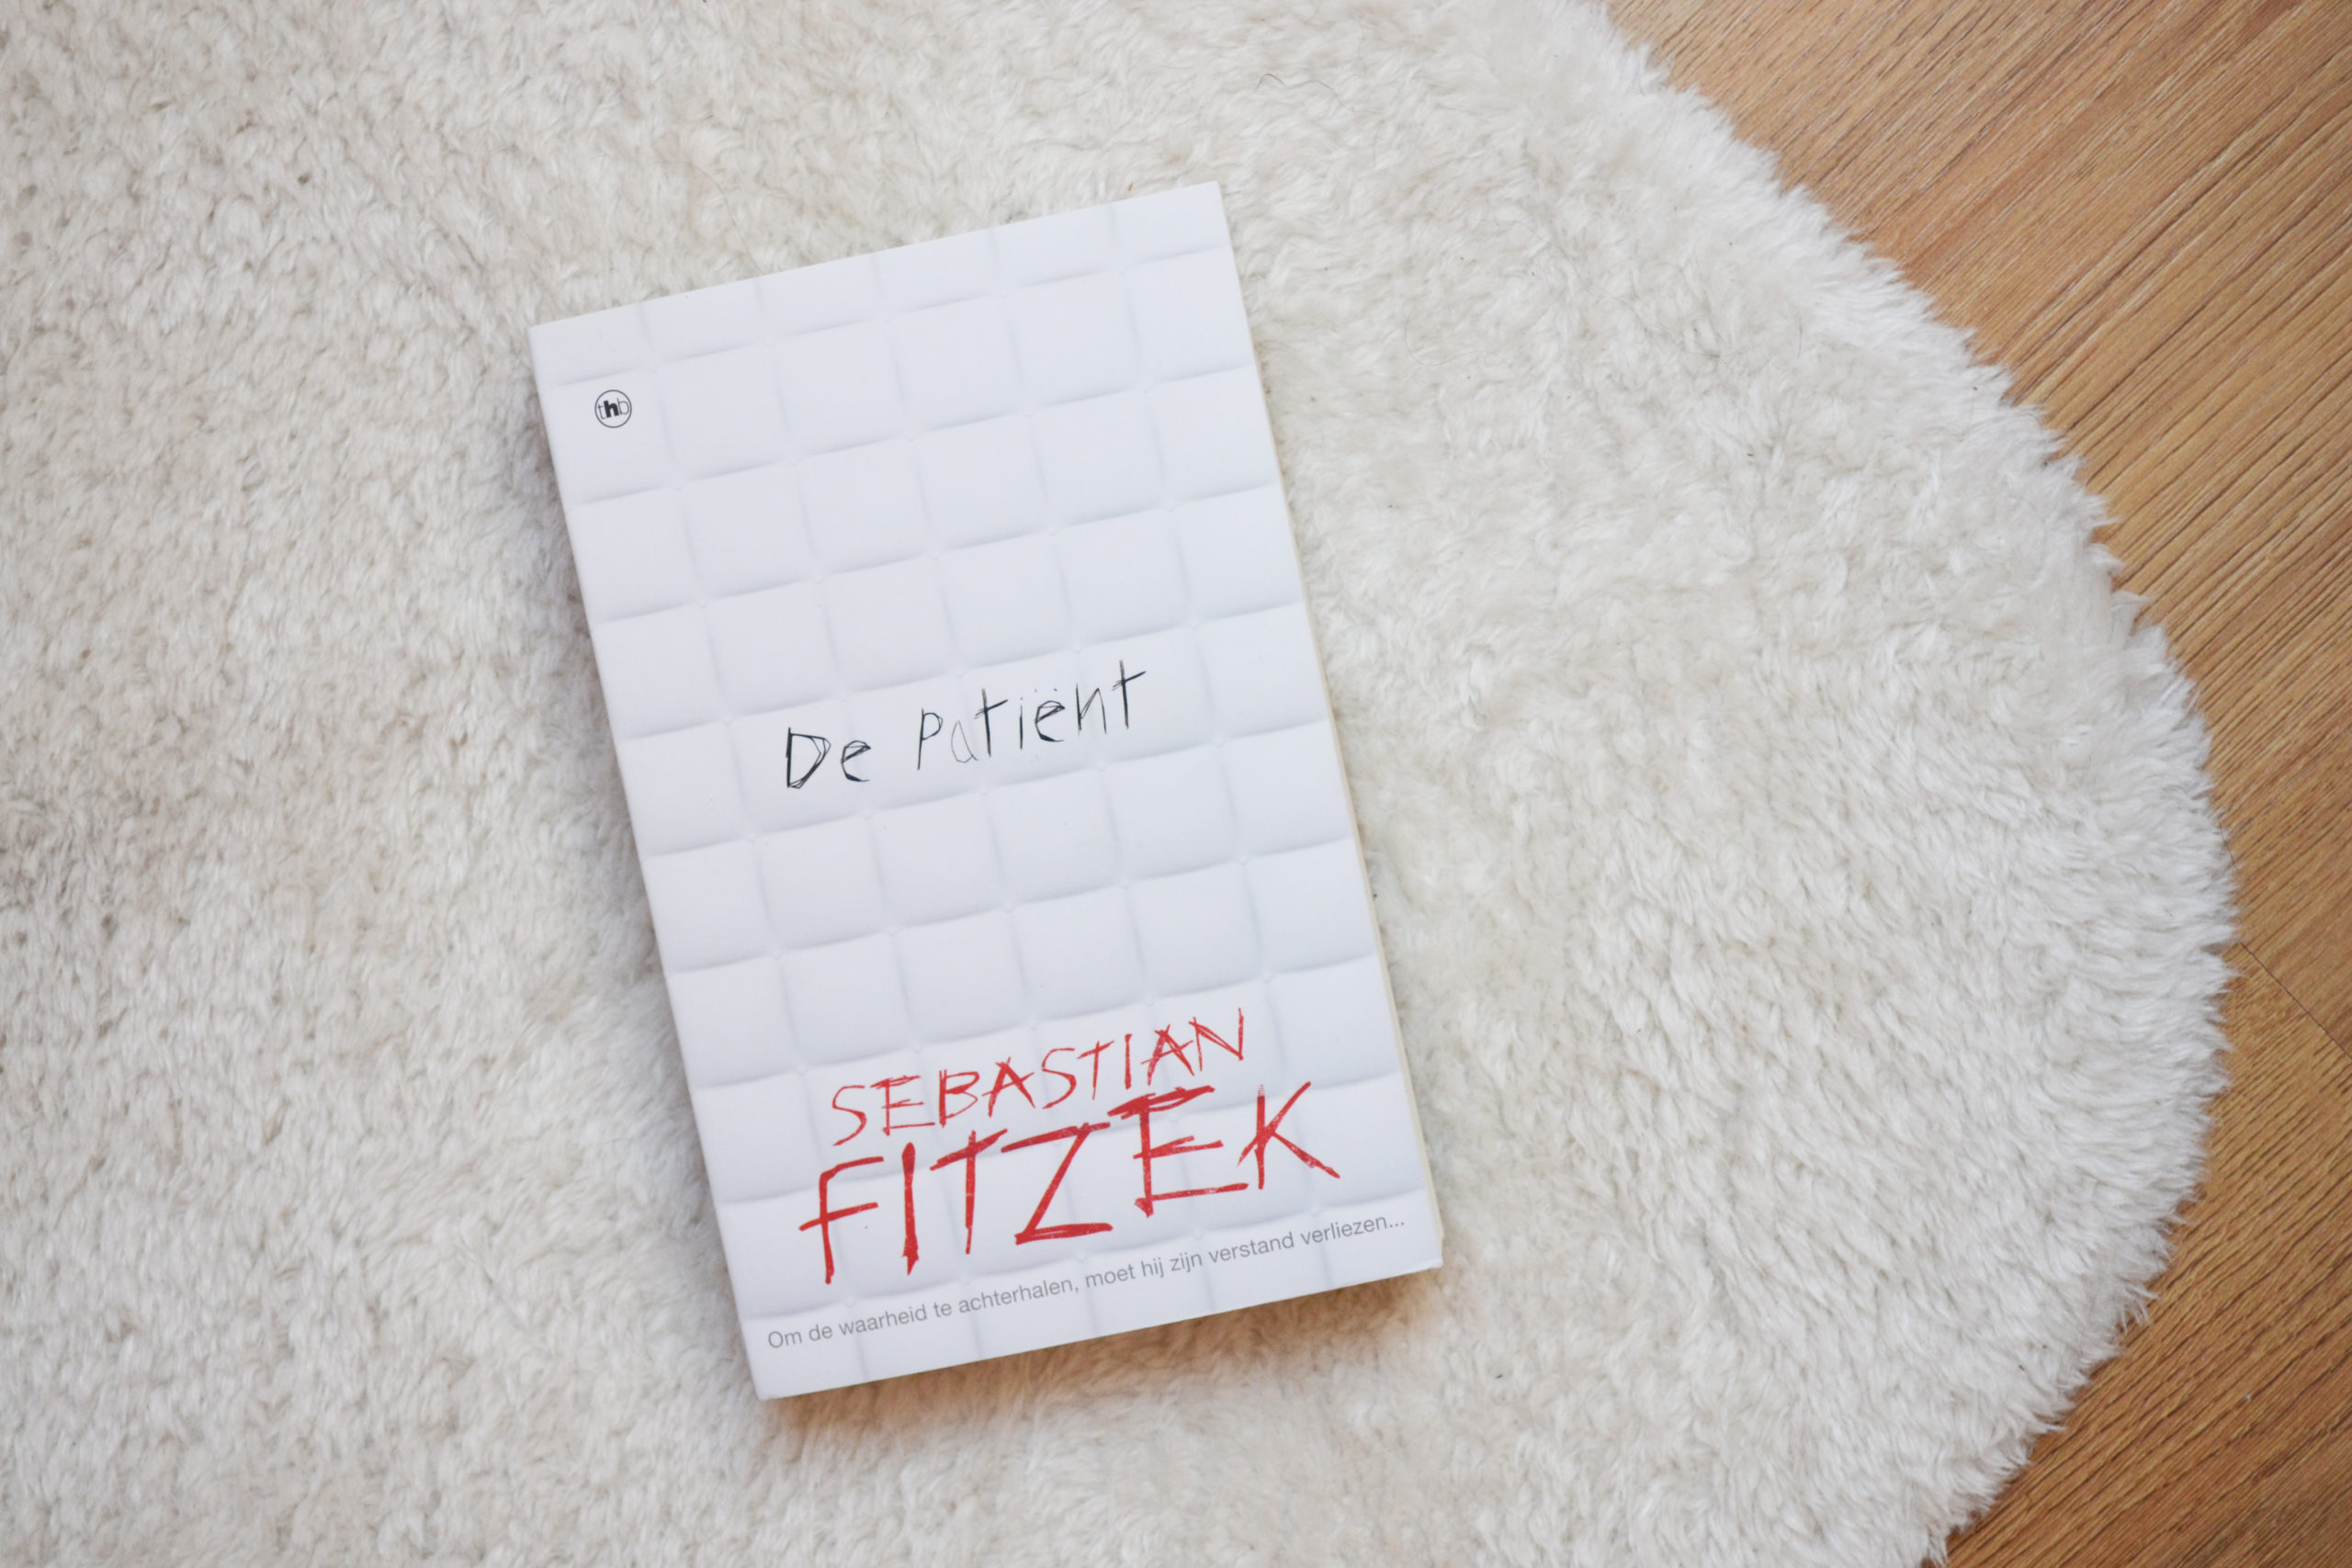 Sebastian Fitzek - De patiënt